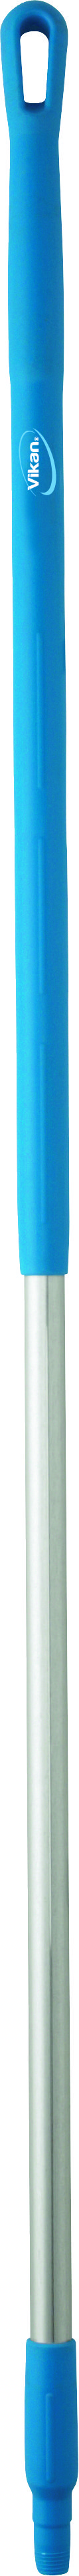 Рукоятка Vikan эргономичная алюминиевая, 1510 мм, синяя